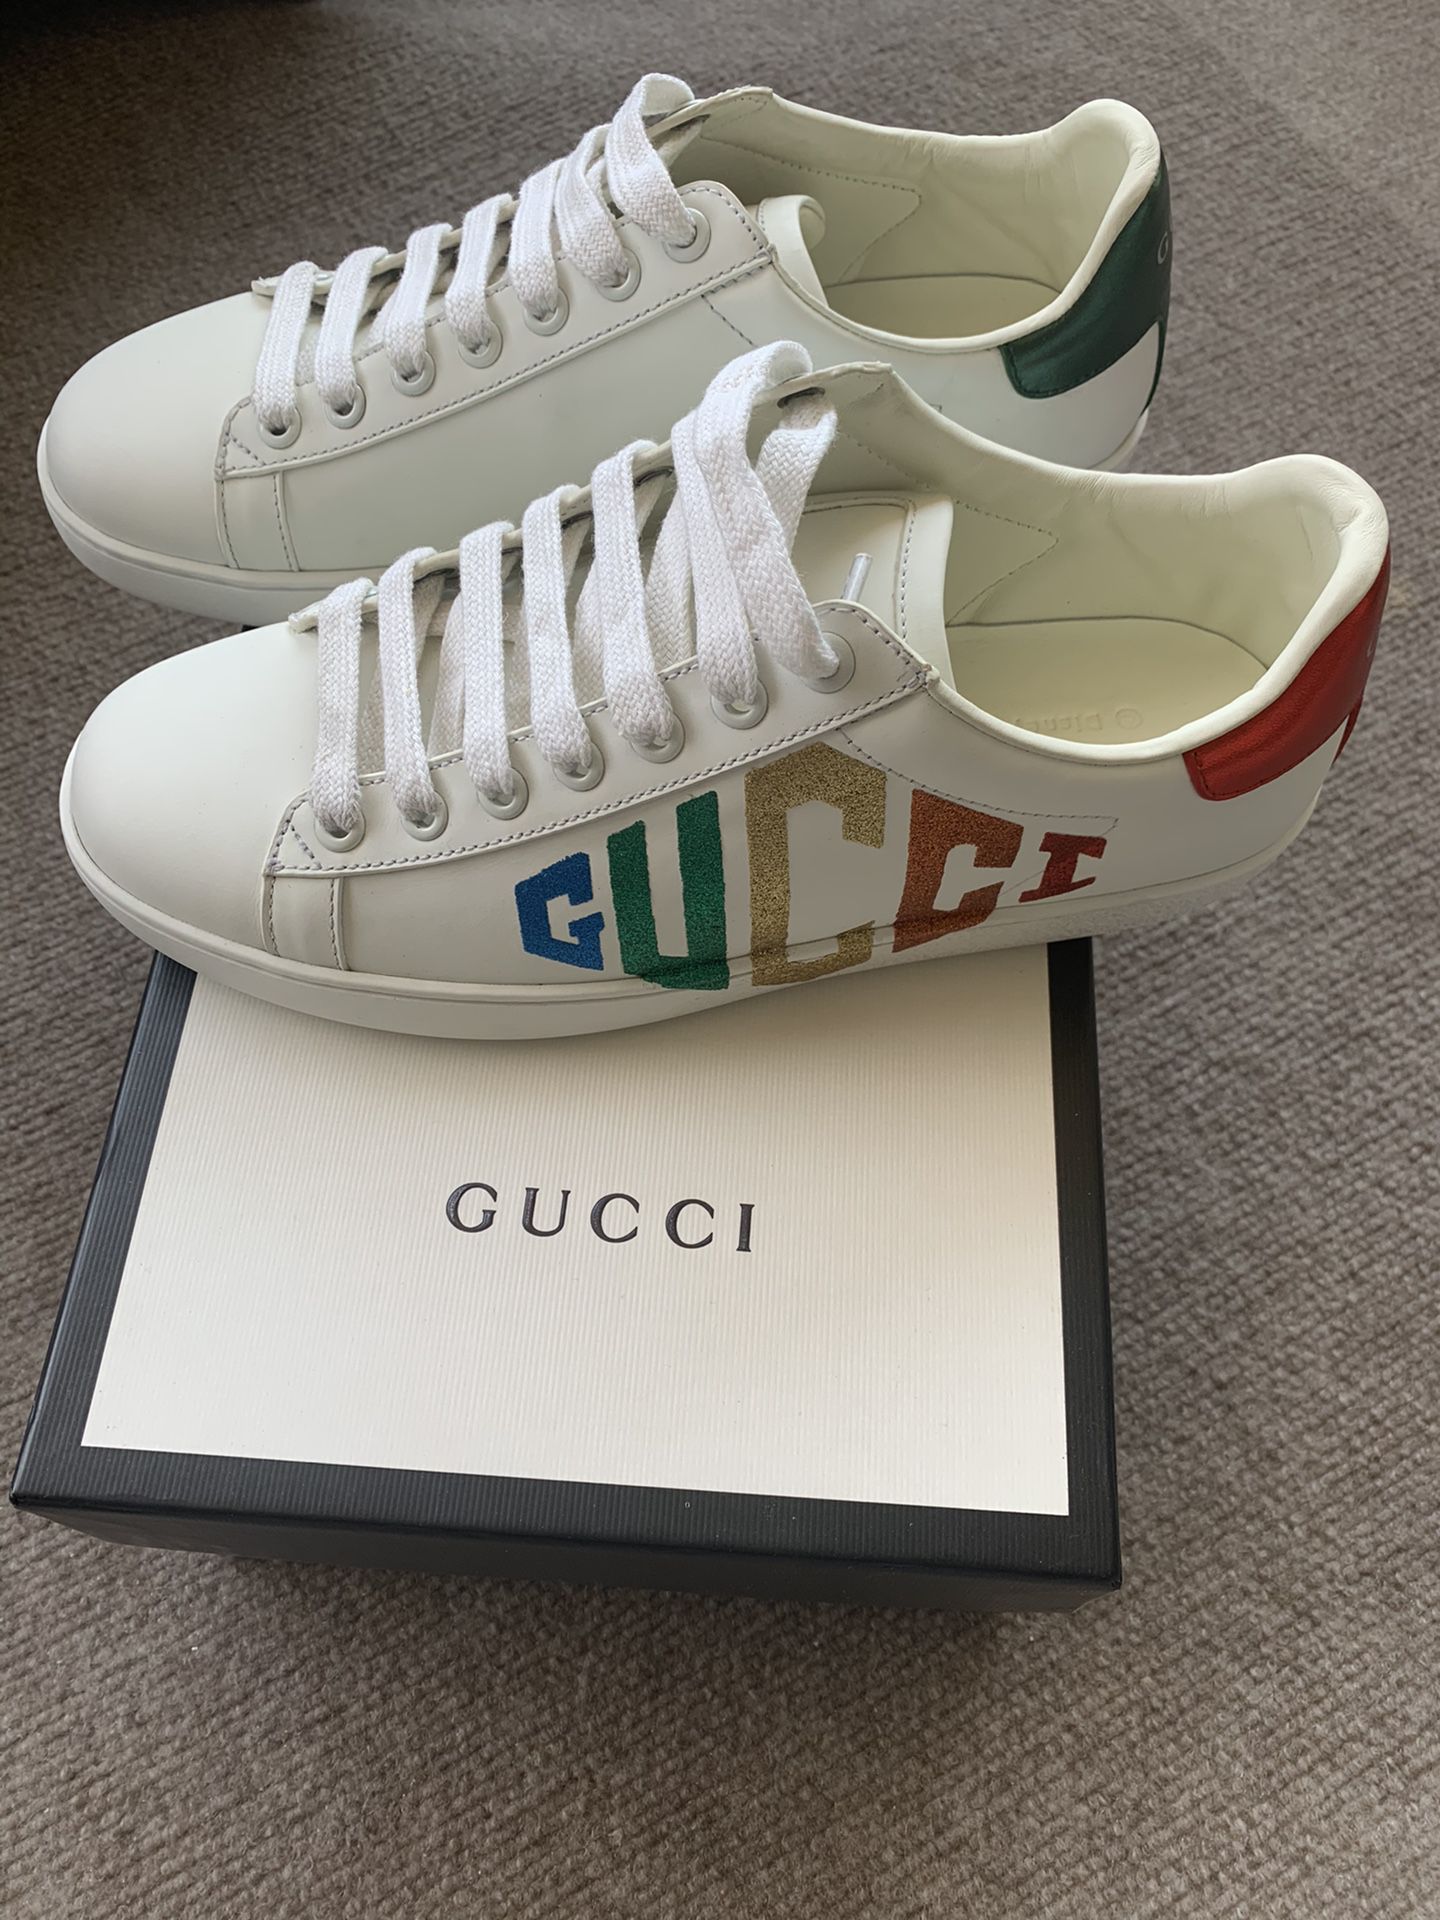 Women’s Gucci sneakers 9